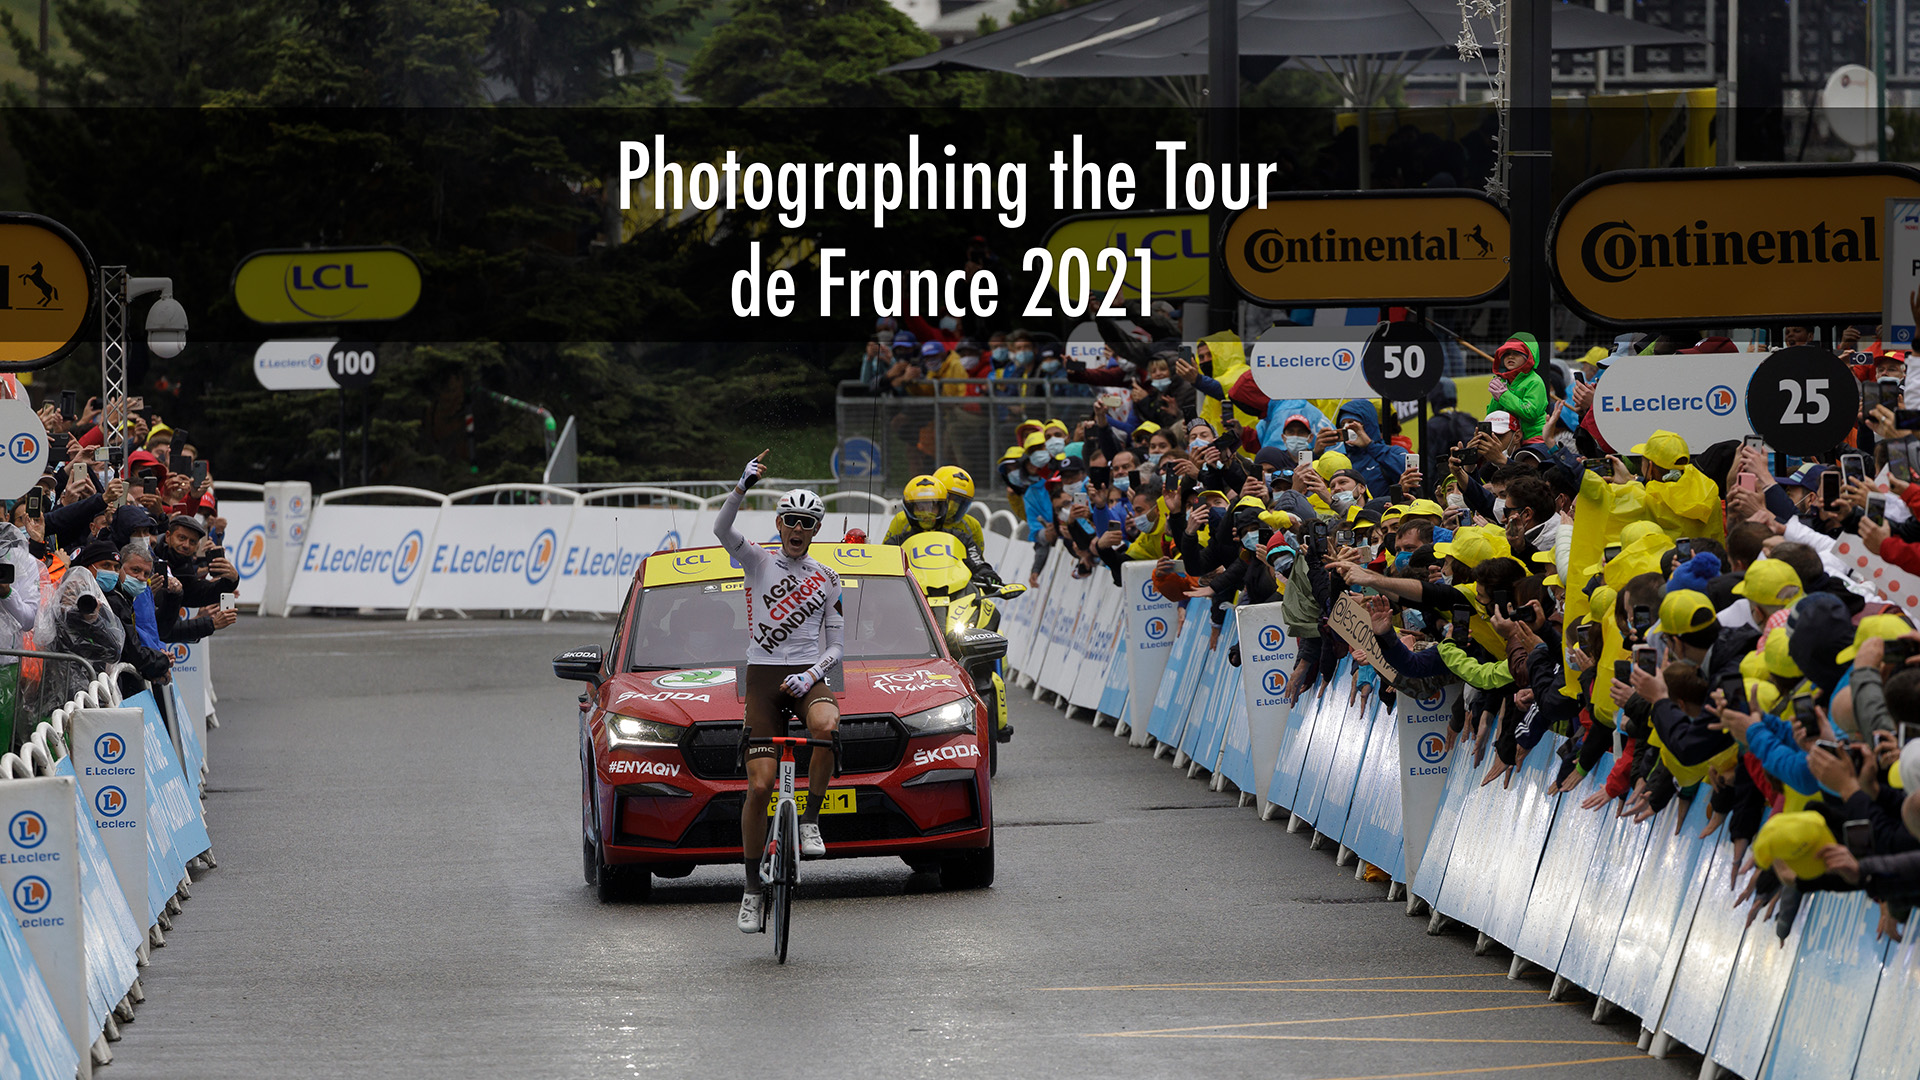 Photographing the Tour de France 2021.